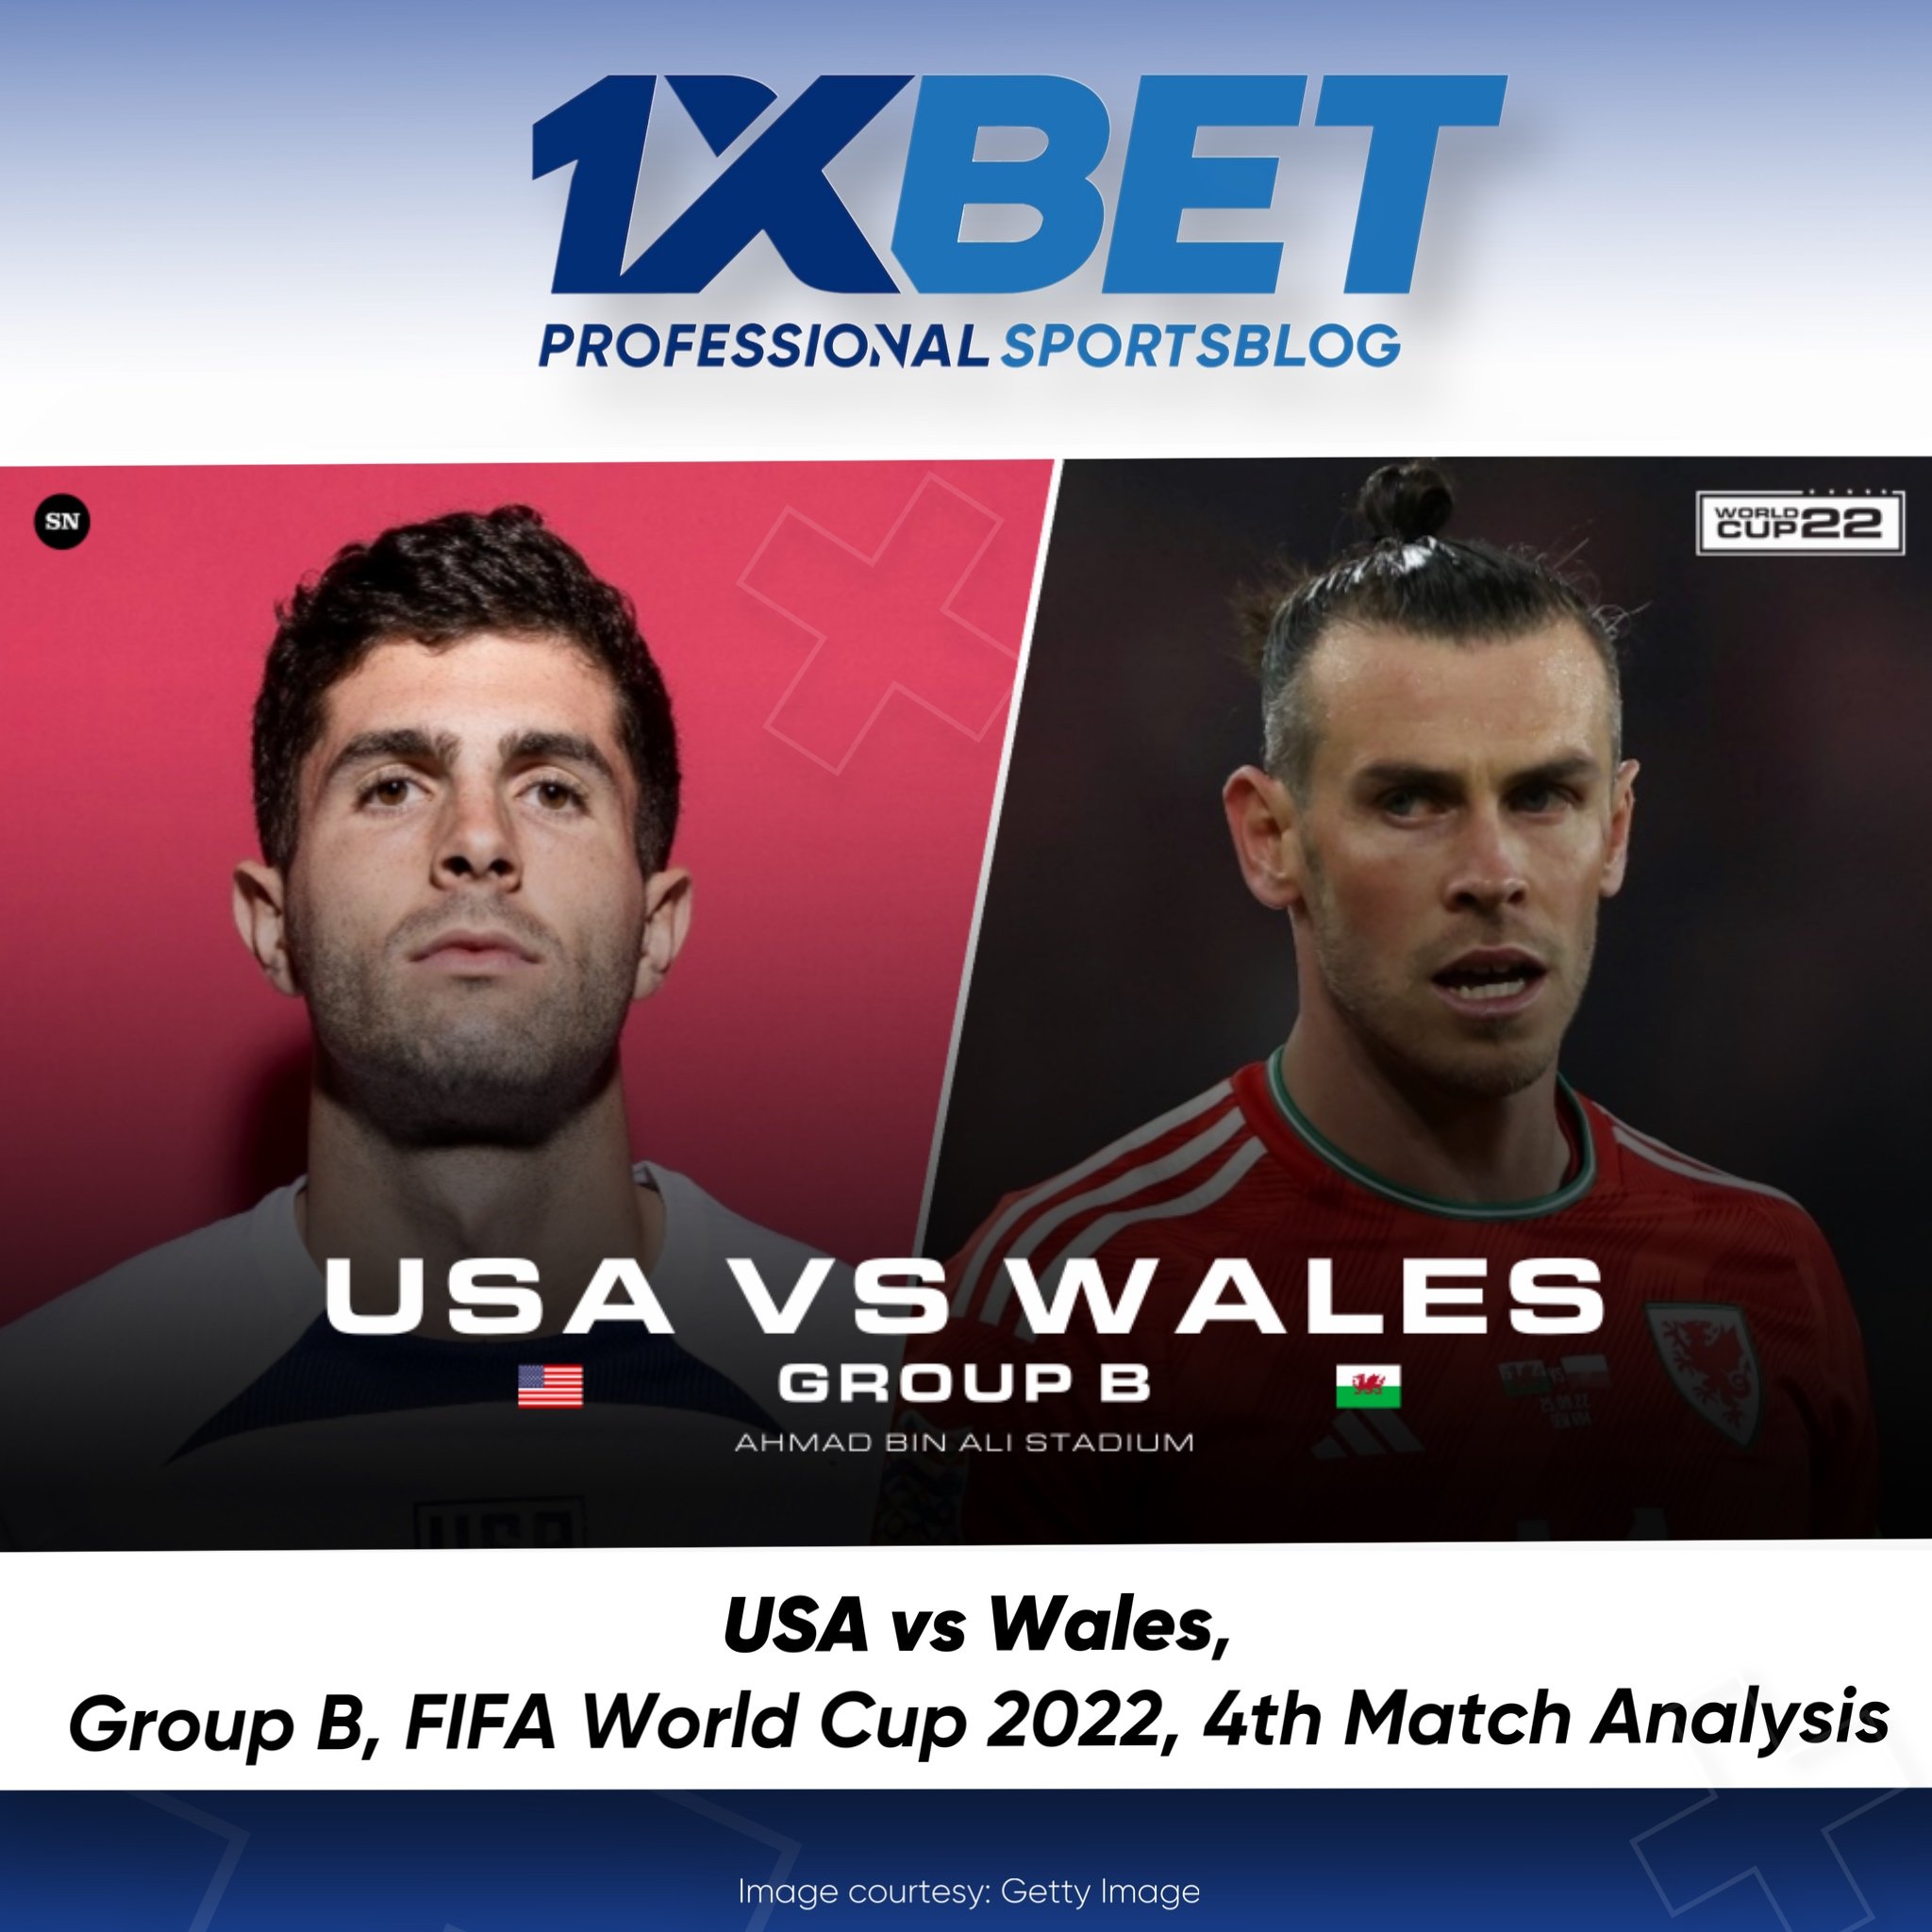 USA vs Wales, Group B, FIFA World Cup 2022, 4th Match Analysis